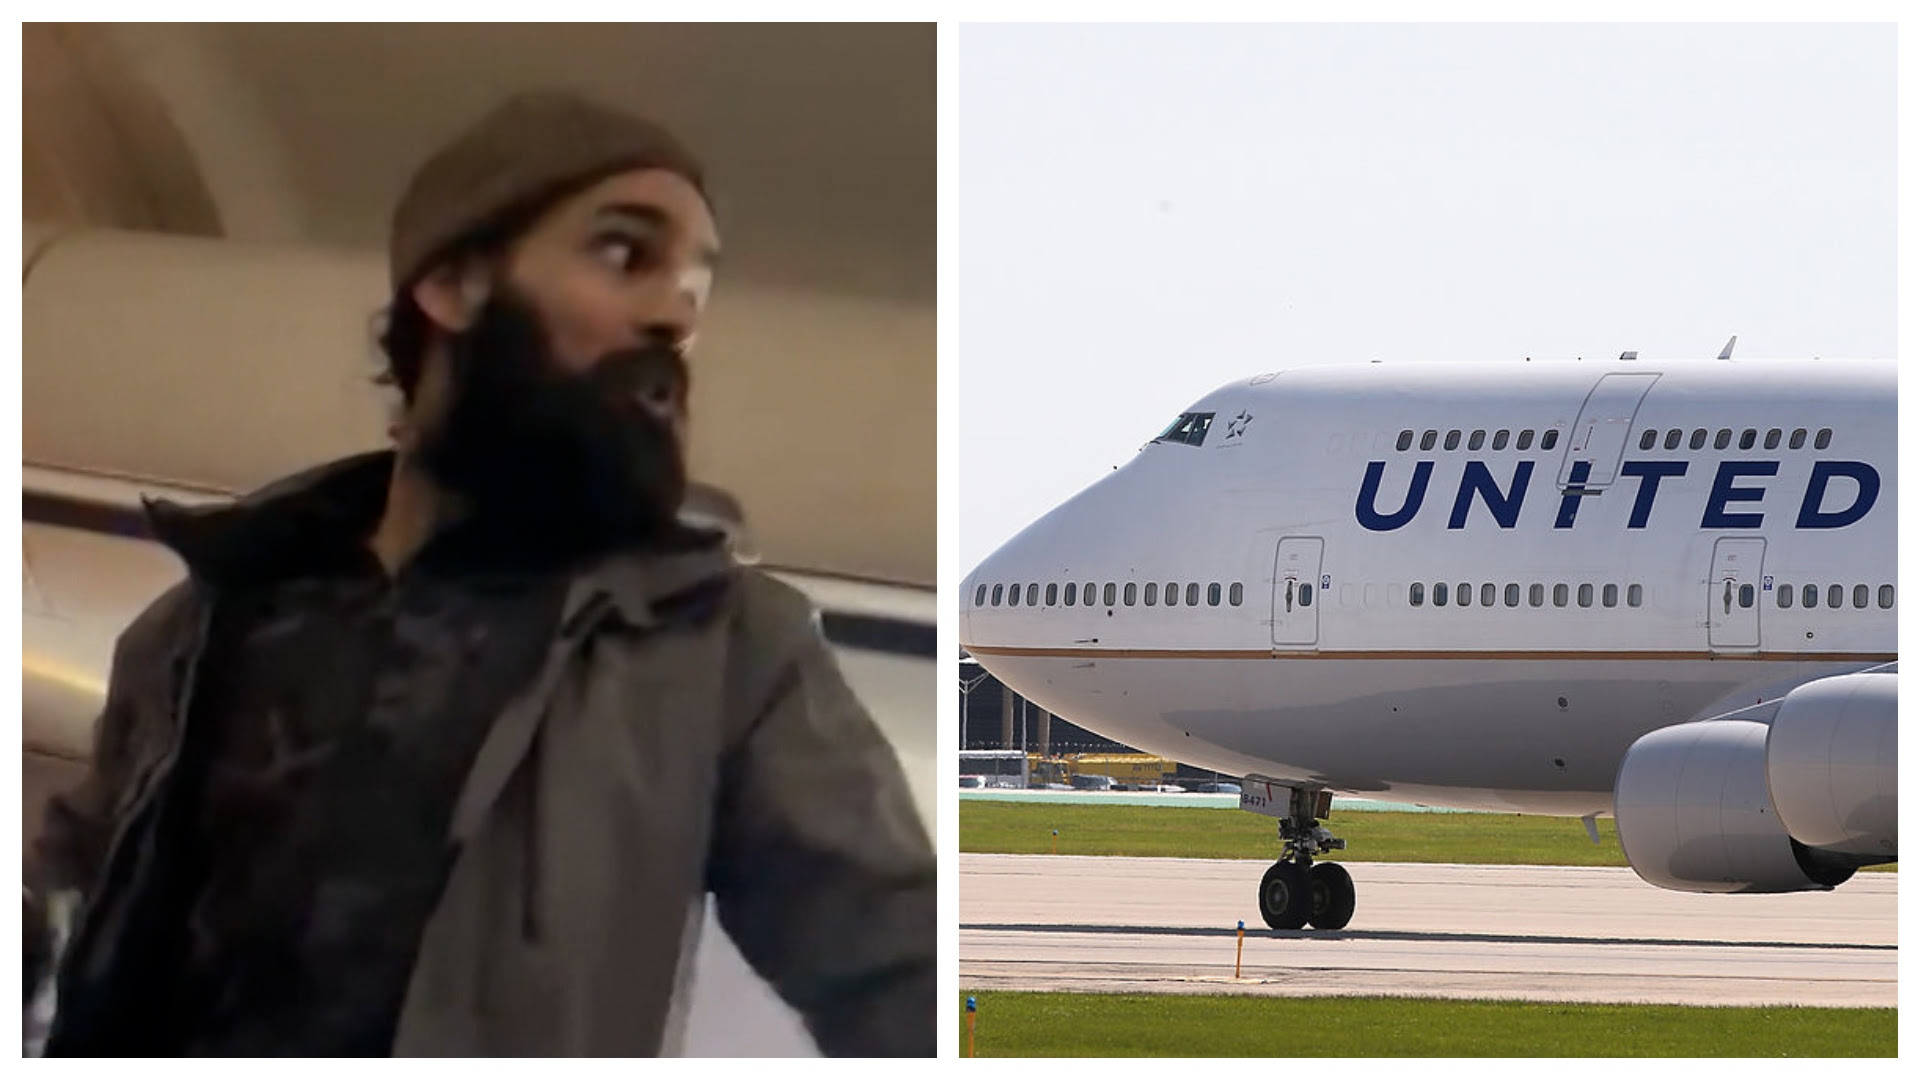 ‘Voy a matar a todos en este avión’, hombre amenaza a gritos vuelo de United Airlines